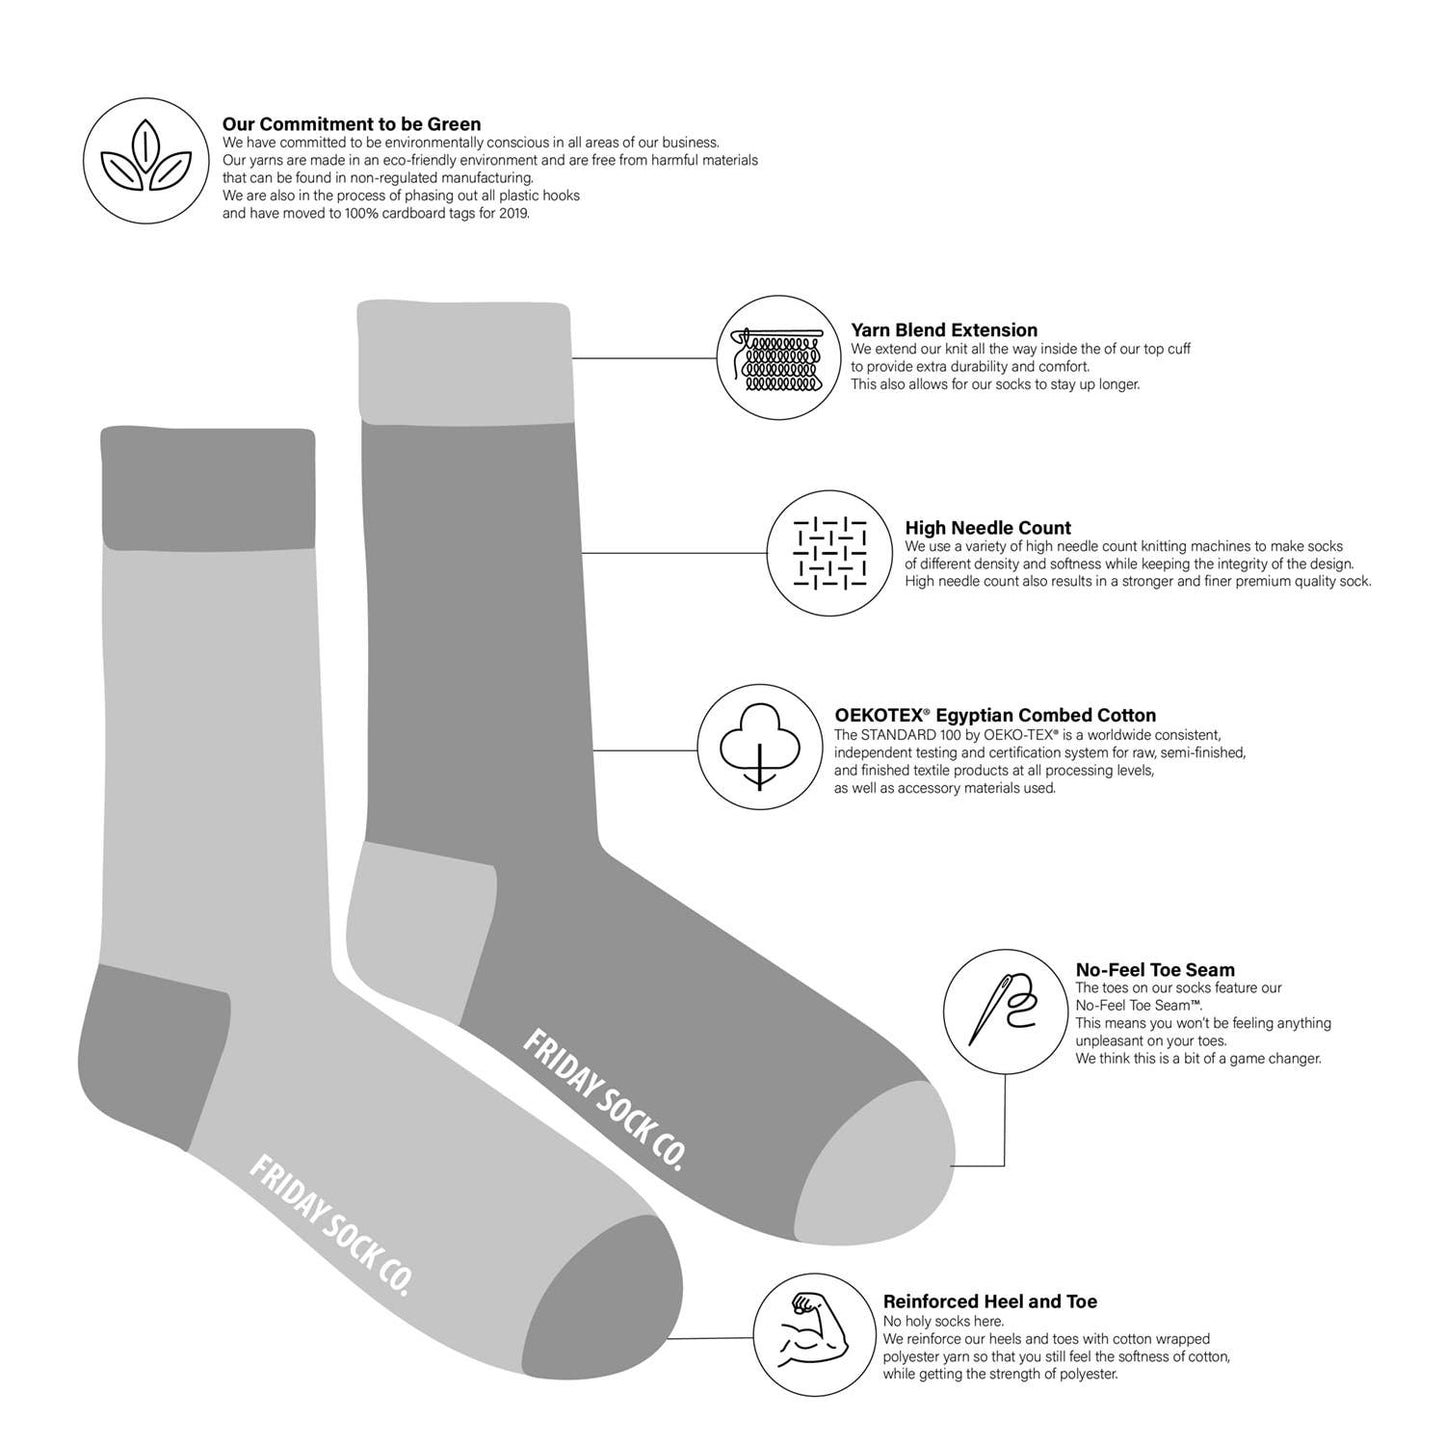 Men’s Socks | Teacher's Apple | Fun Socks